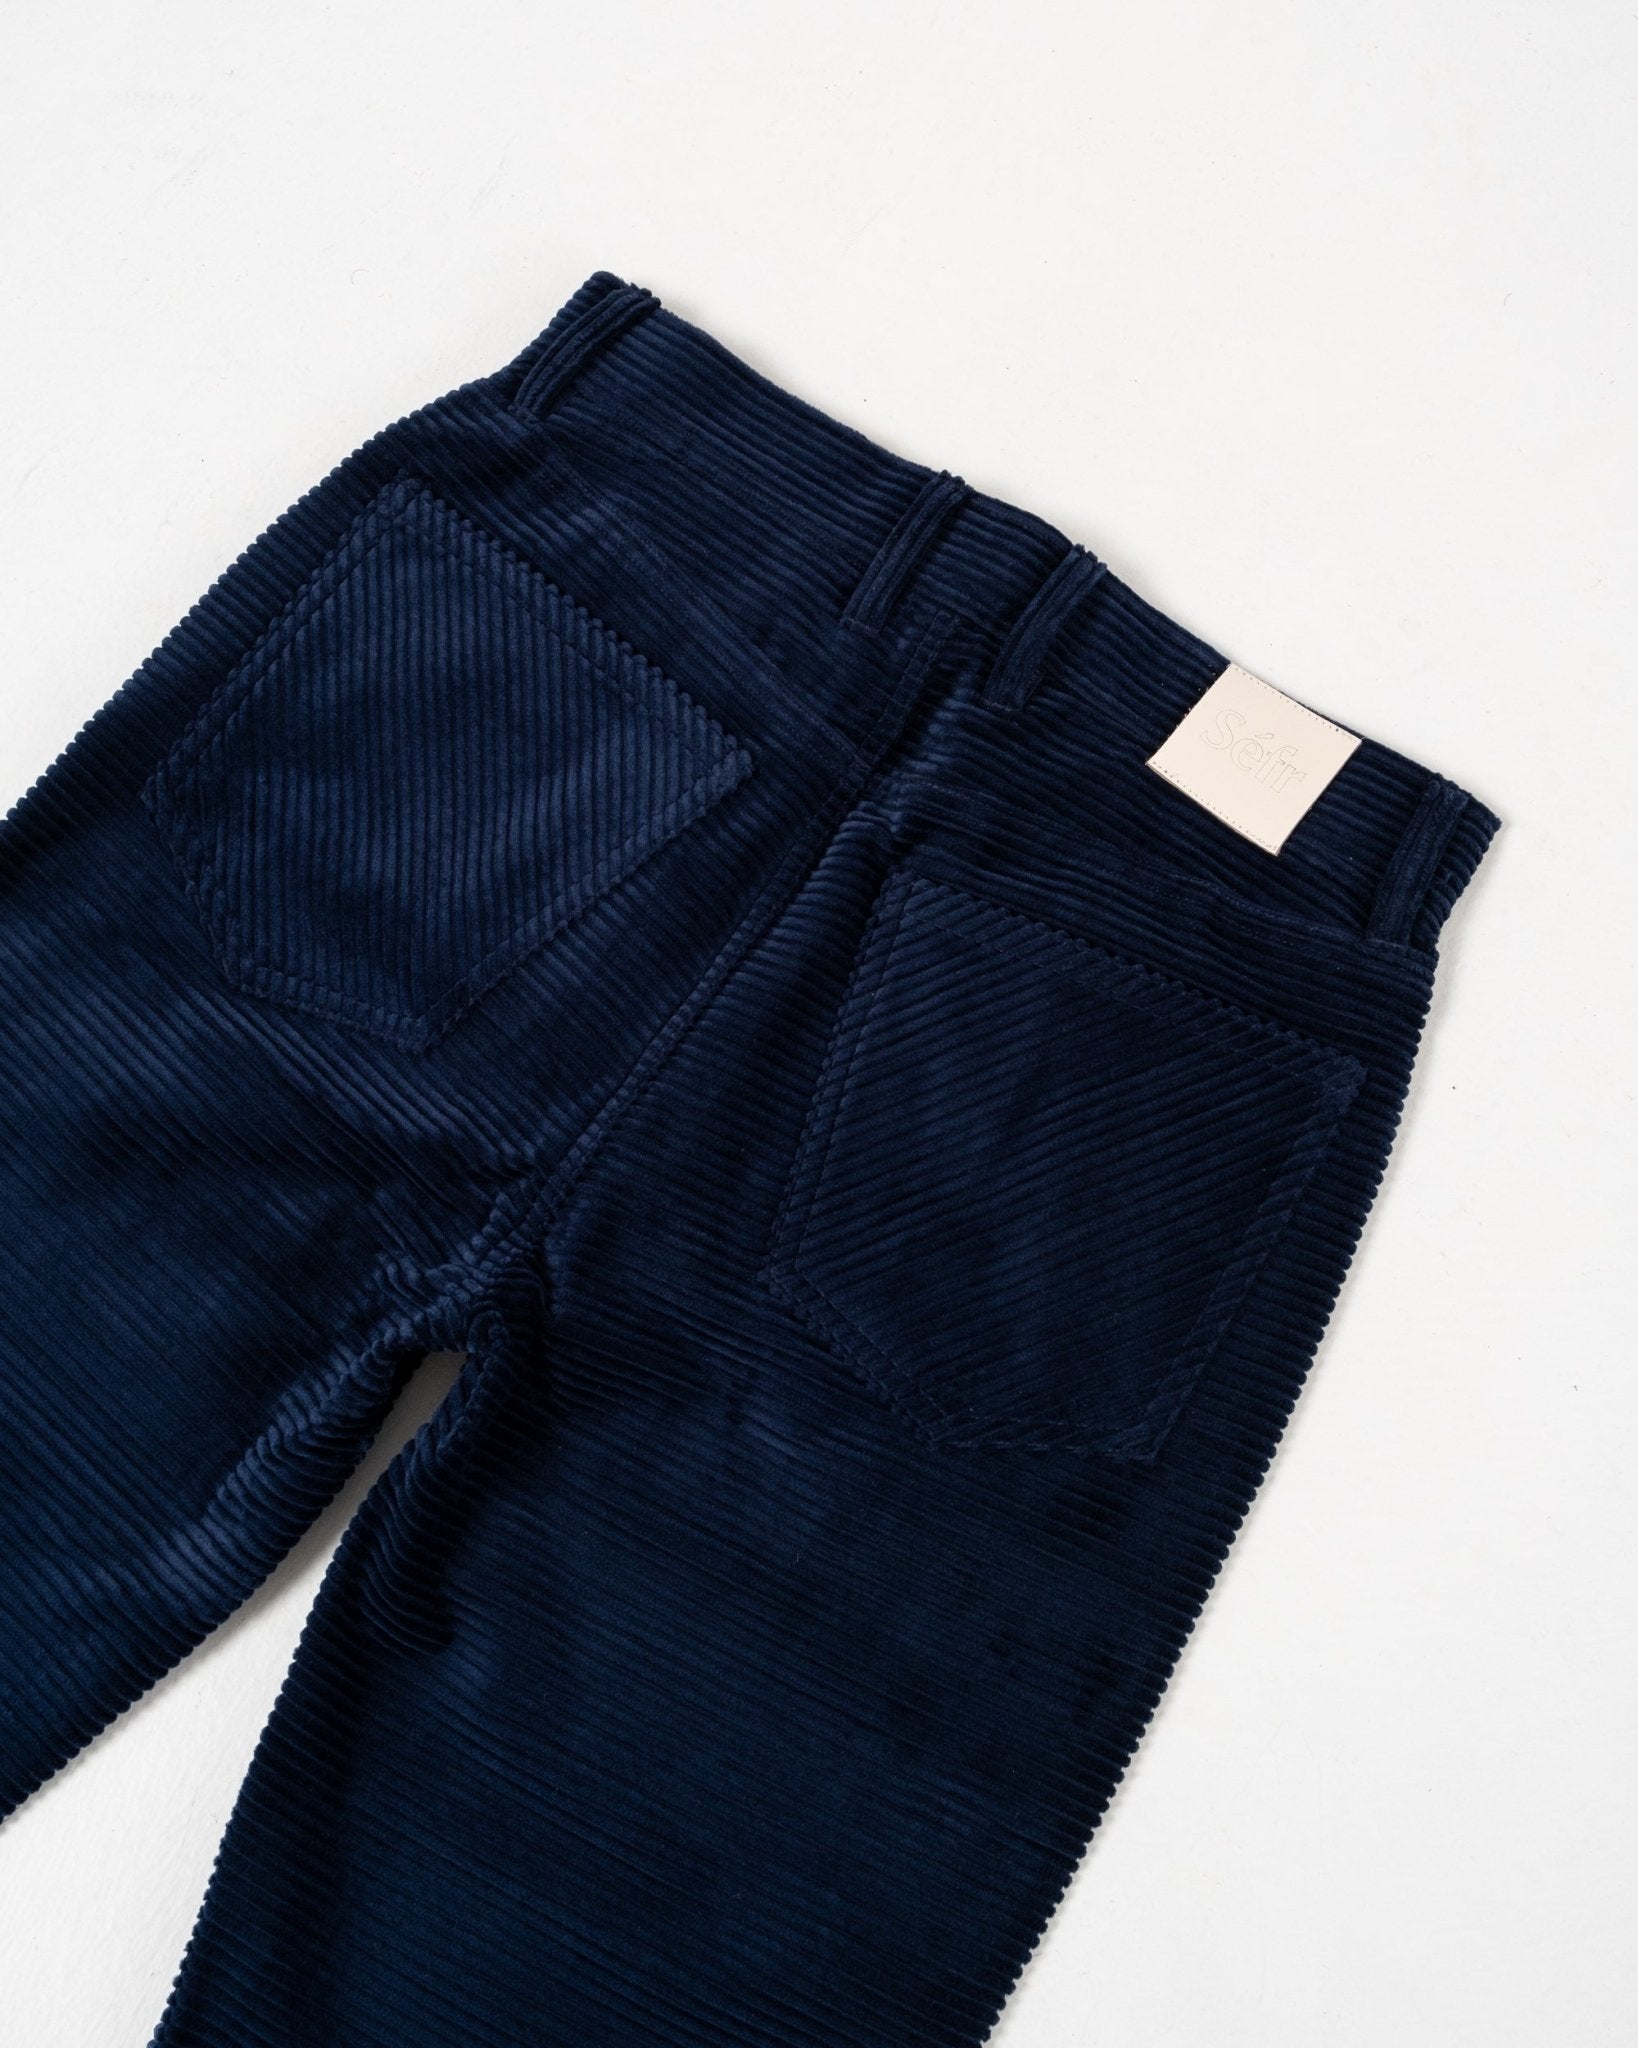 Sin Cord Jeans Navy Blue - Meadow